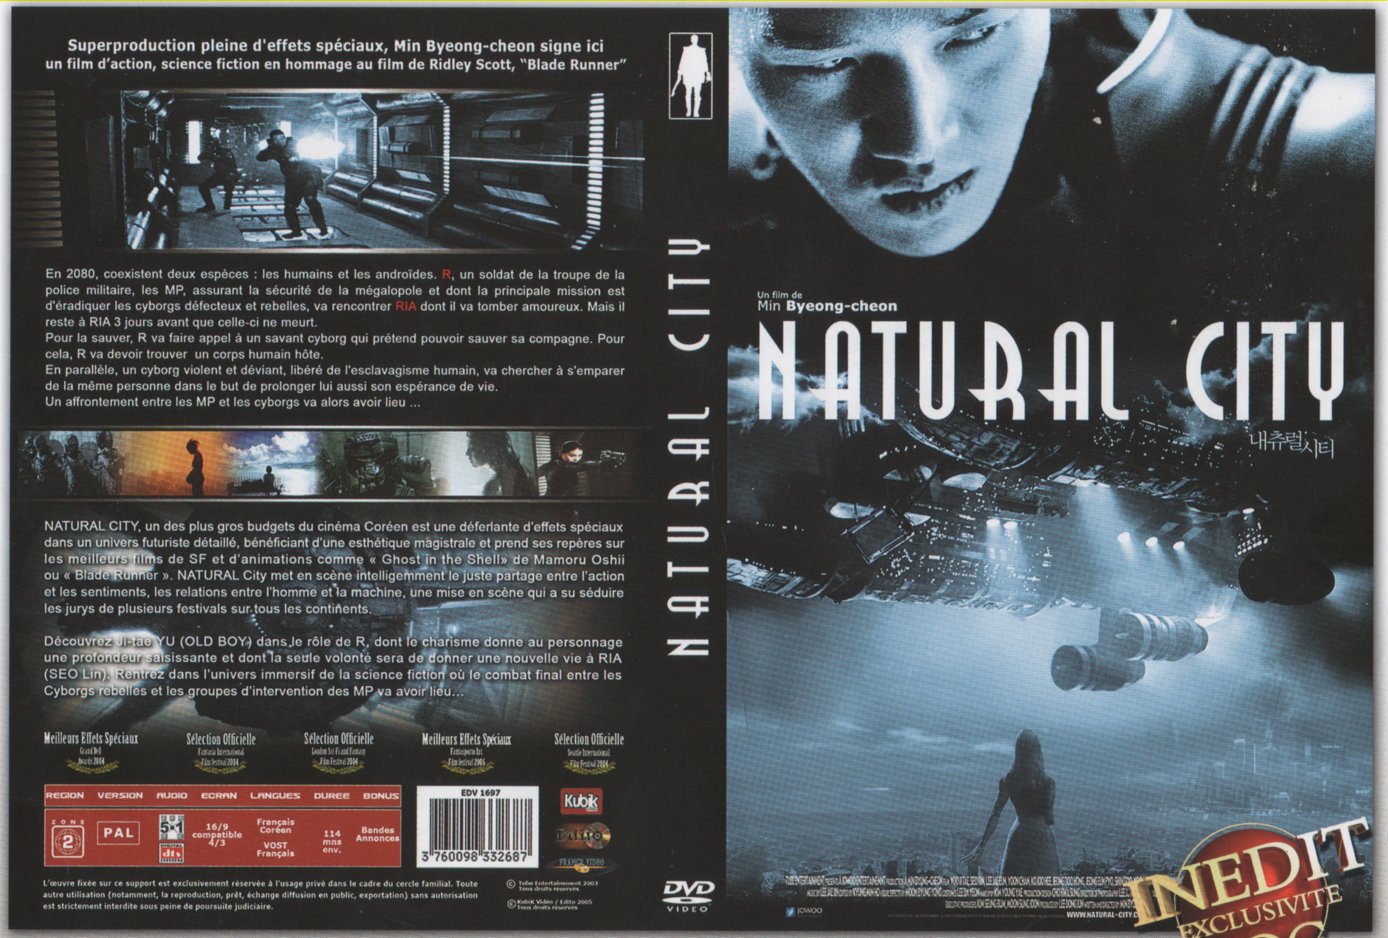 Jaquette DVD Natural city